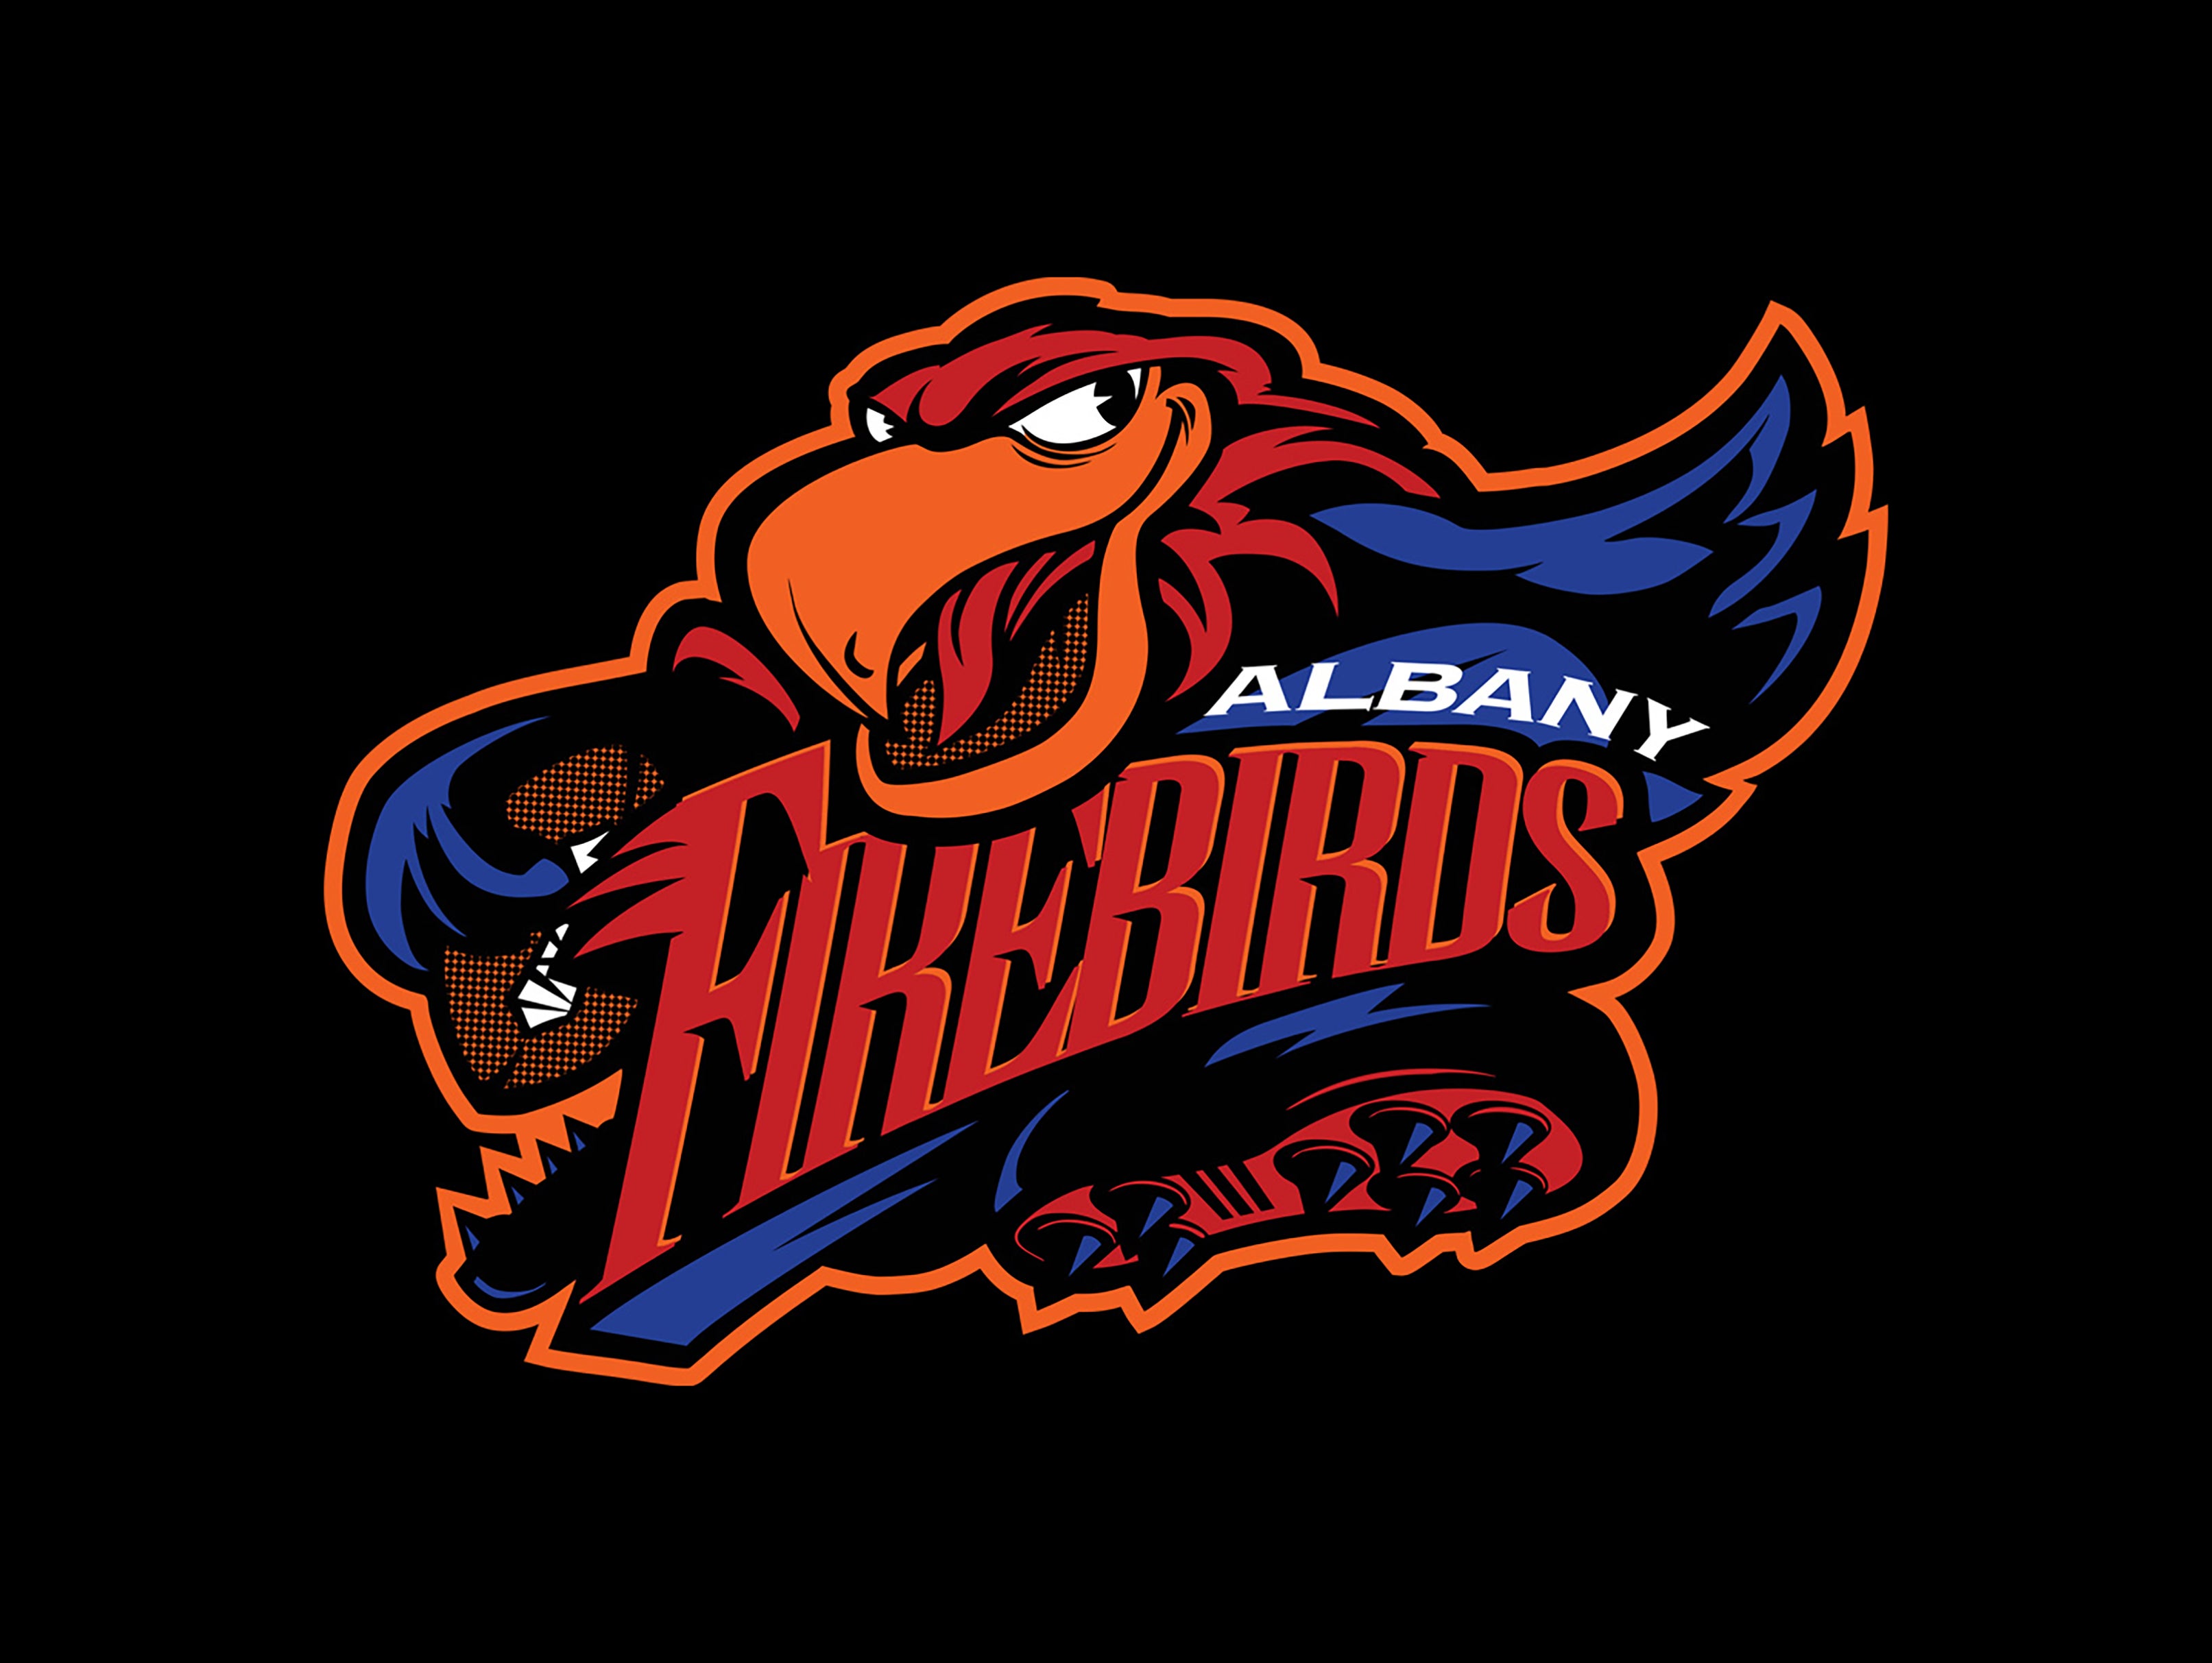 Albany Firebirds at MVP Arena